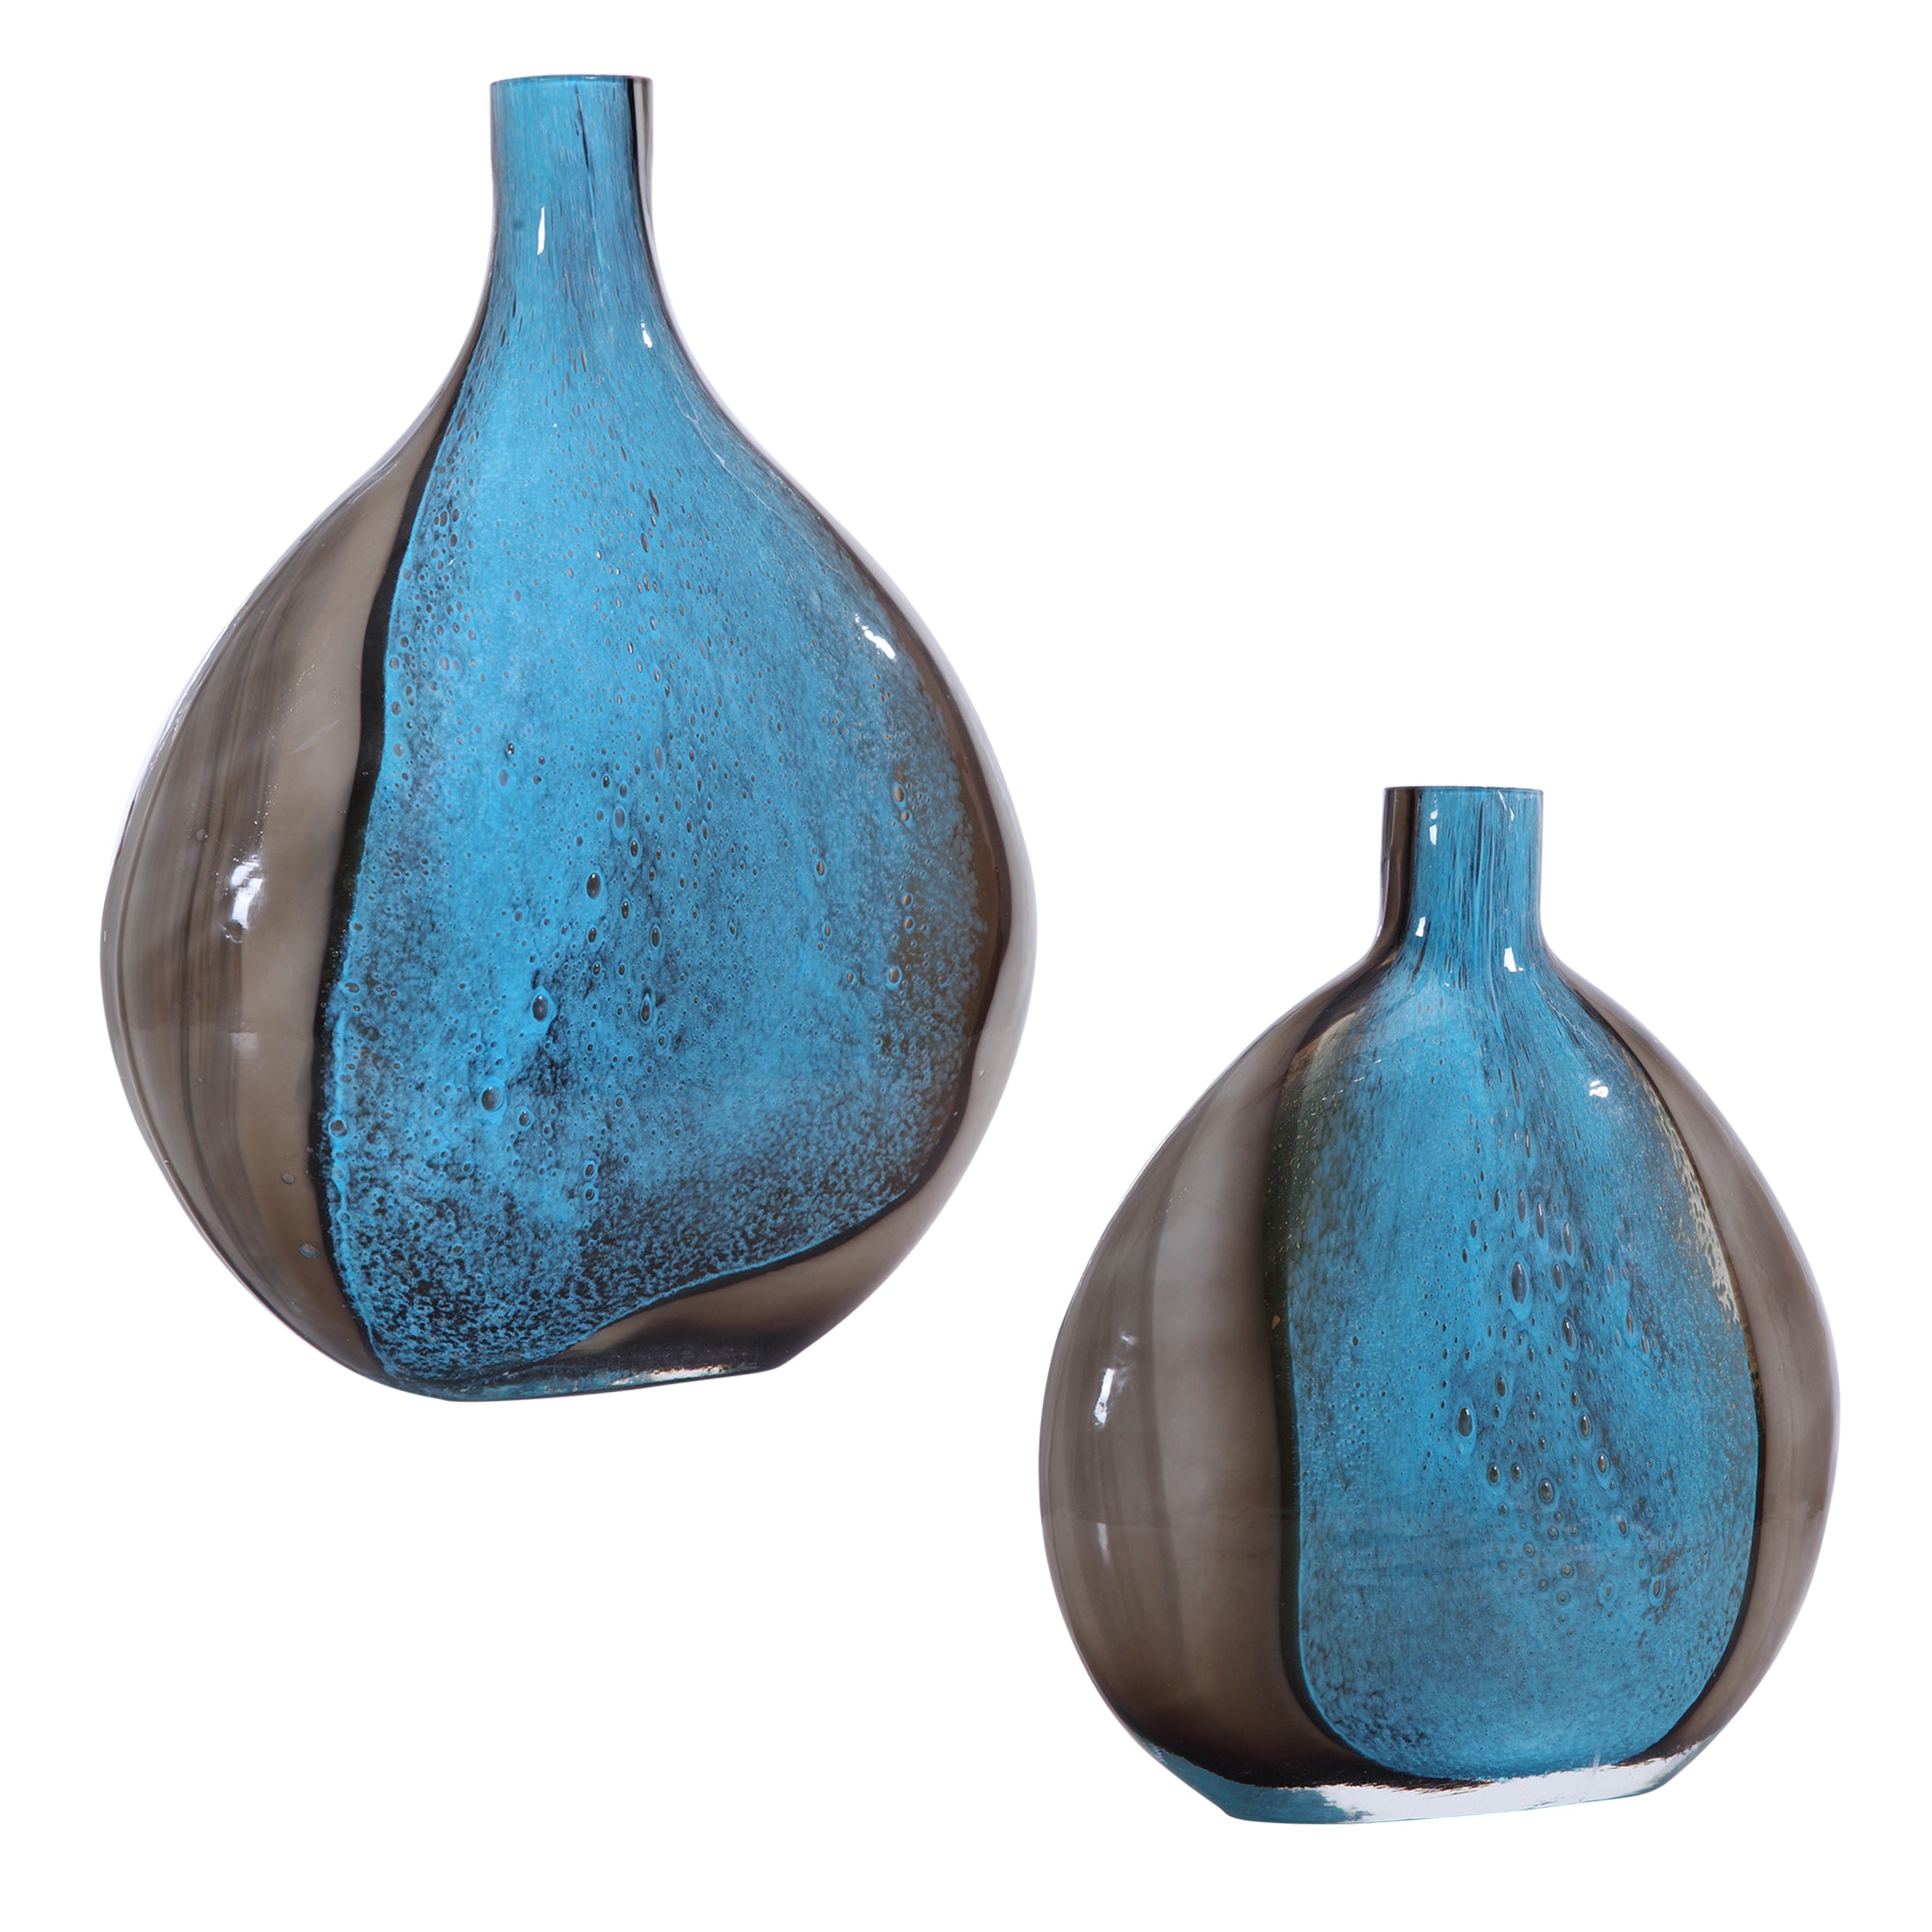 Uttermost Sconset Blue and White Earthenware Vases Set of 3 